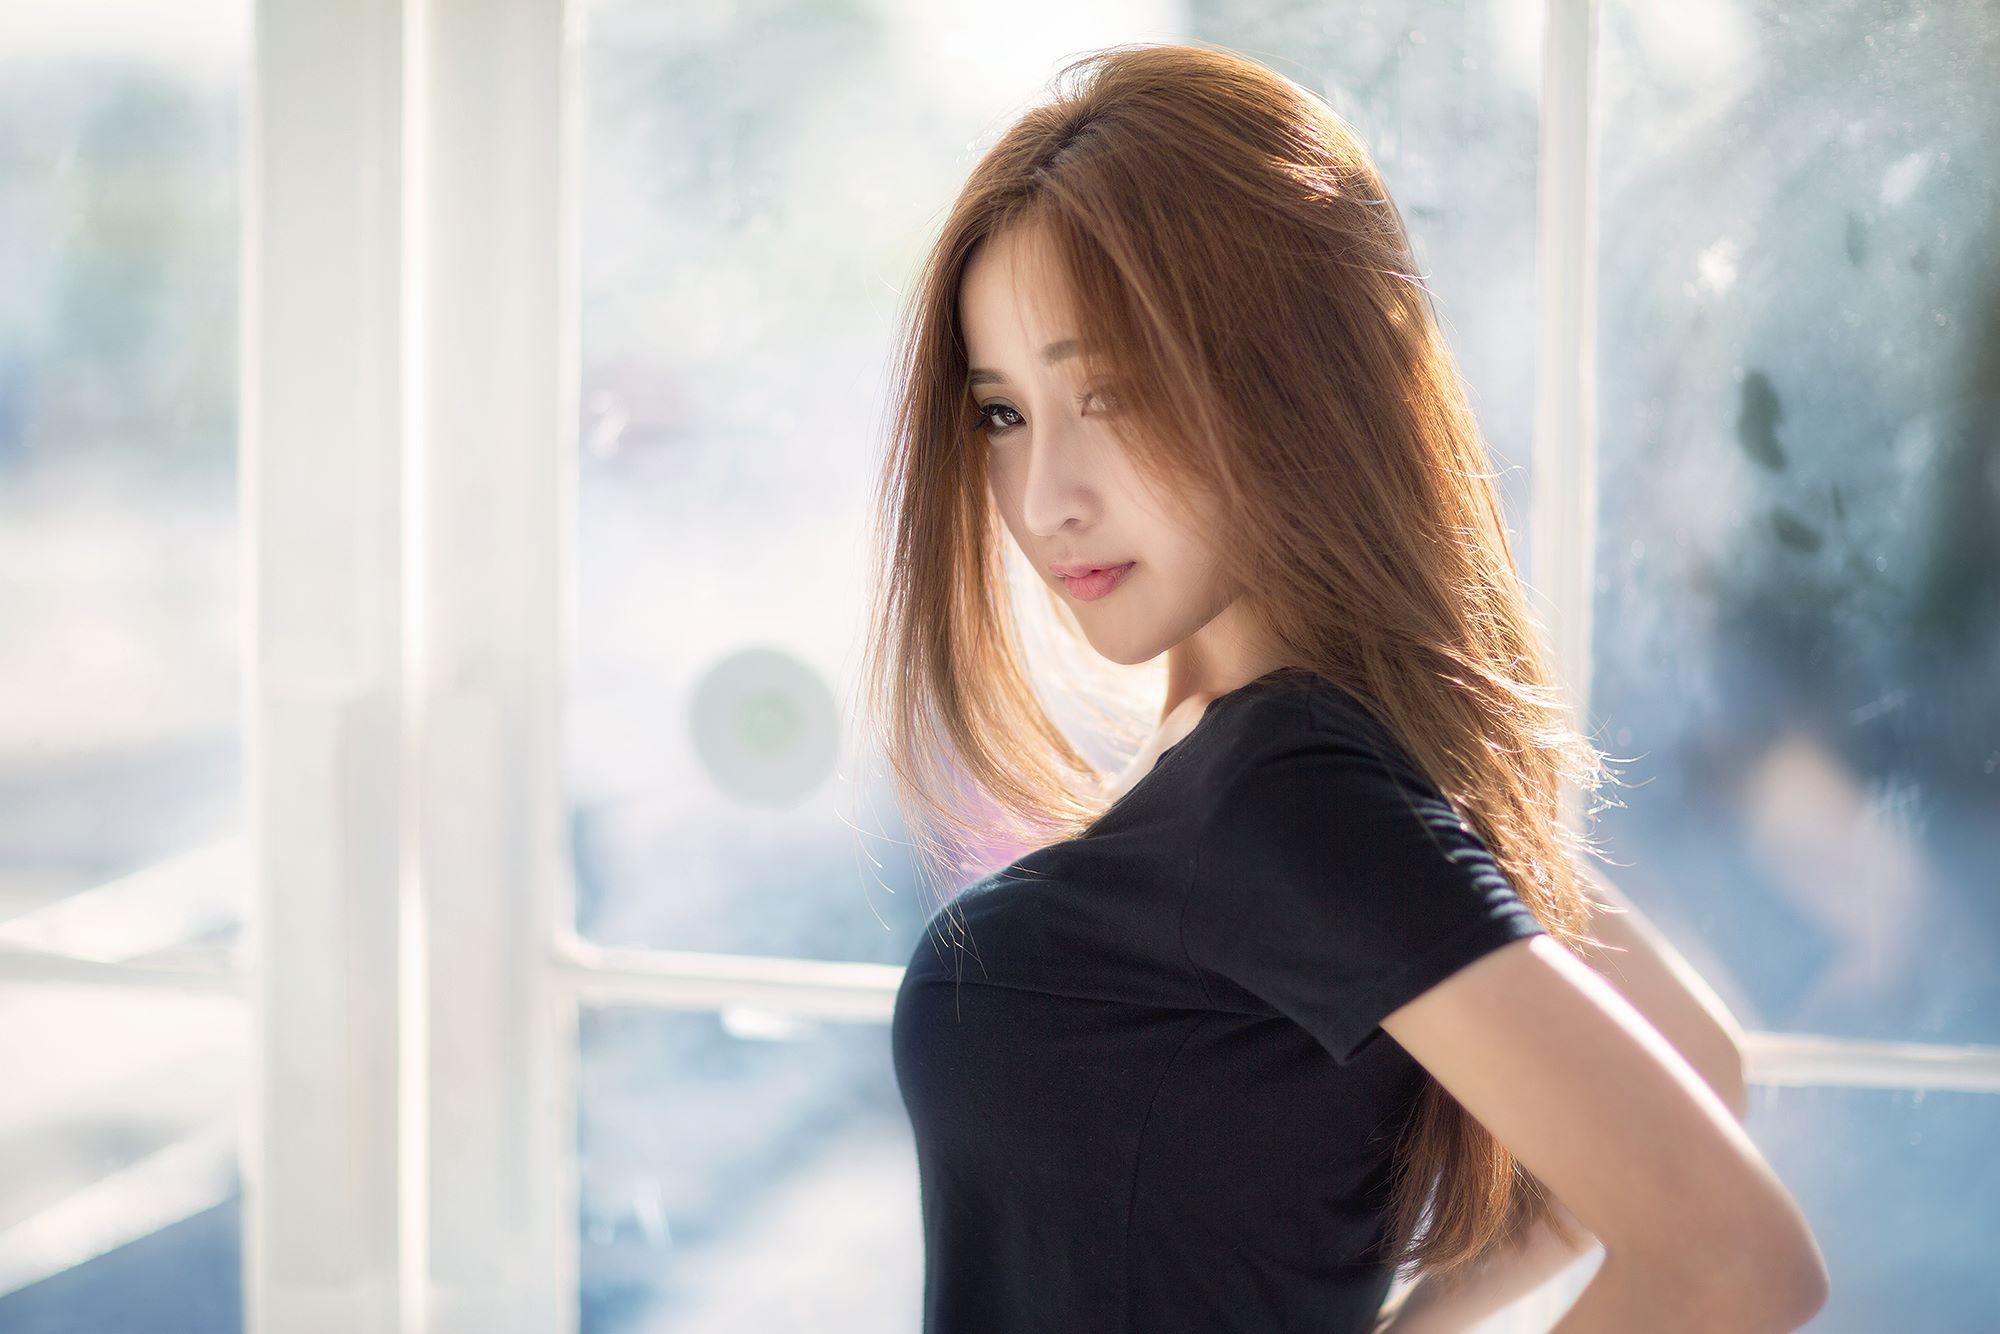 Asian Hot Girl, HD Girls, 4k Wallpaper, Image, Background, Photo